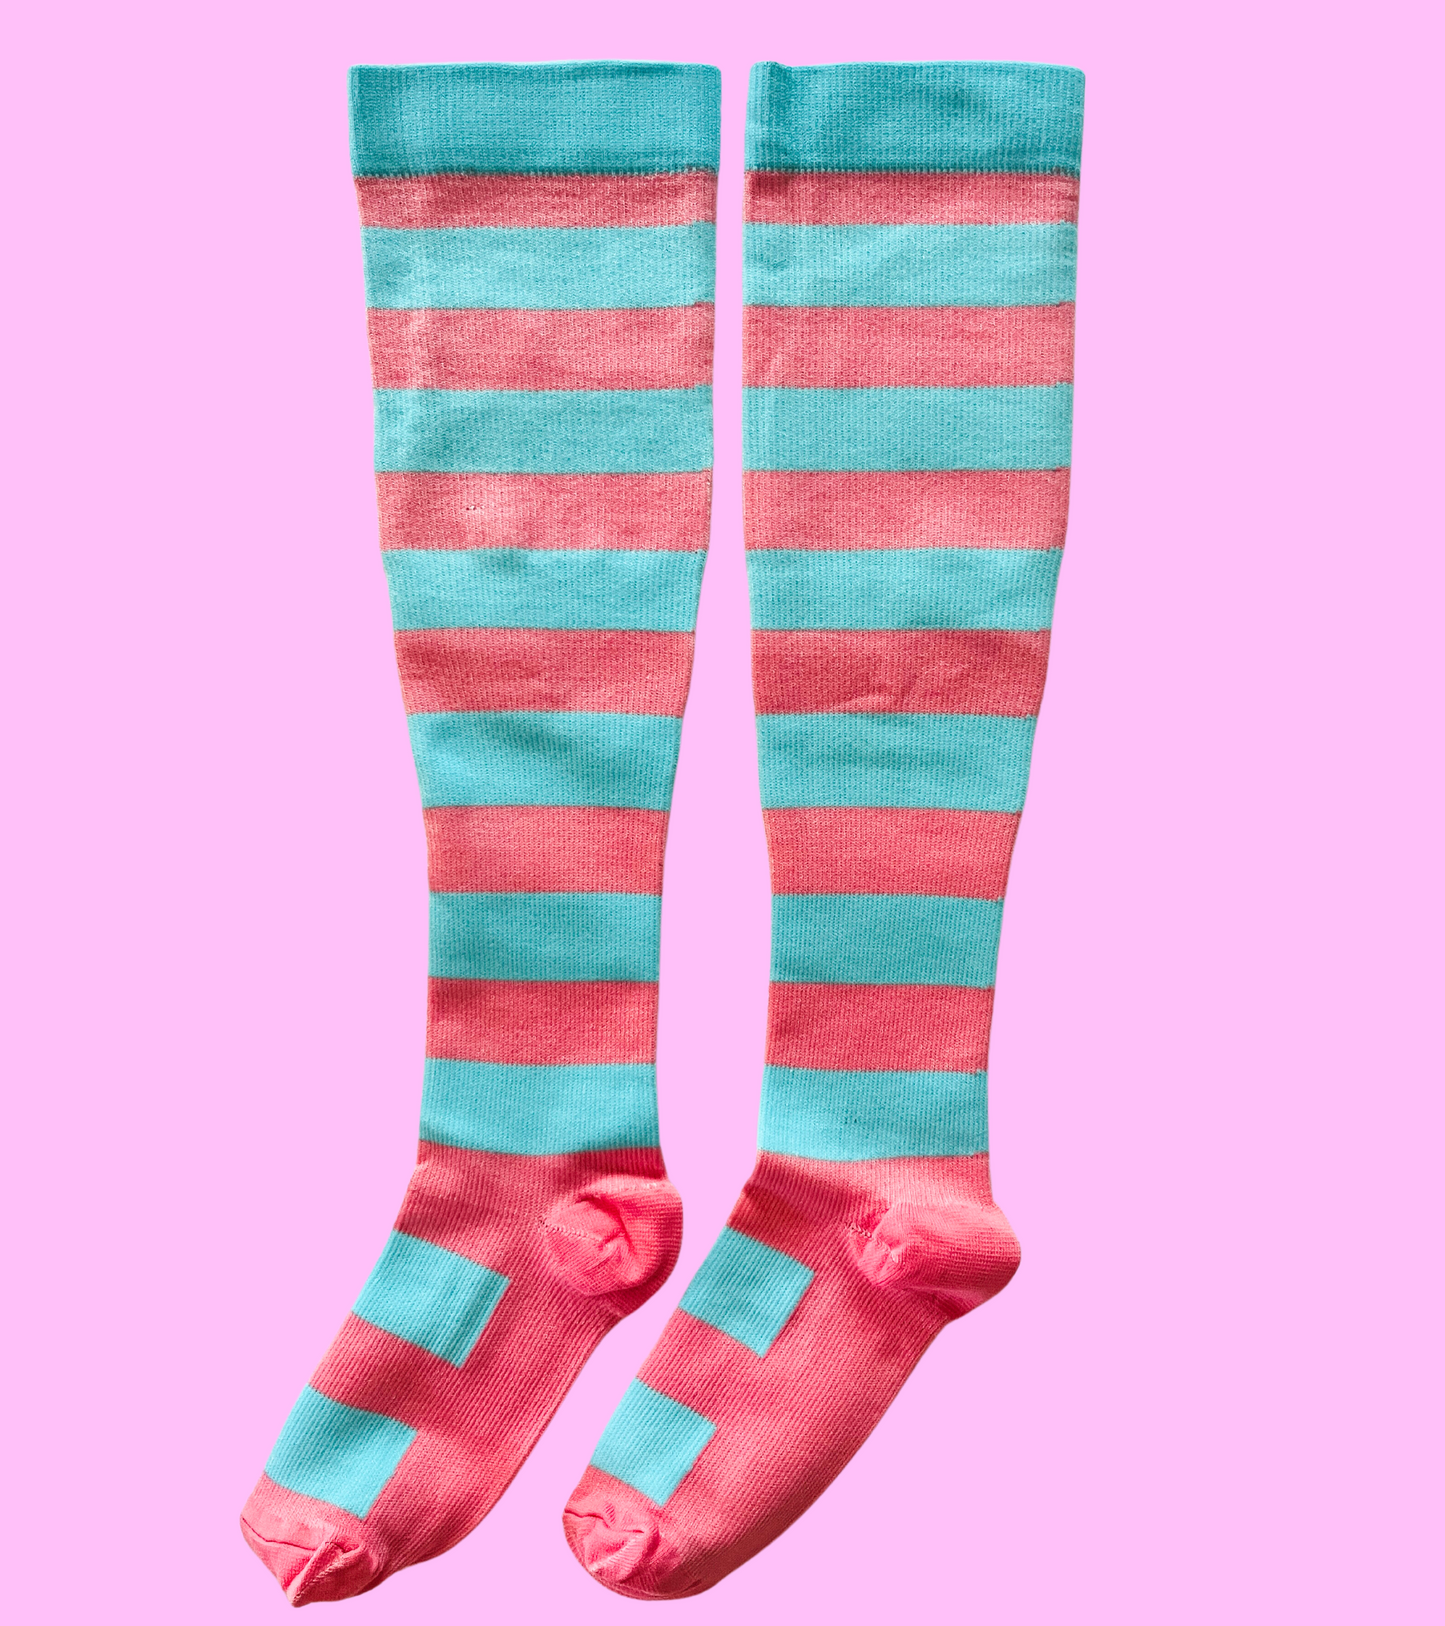 Candy Floss Compression Socks